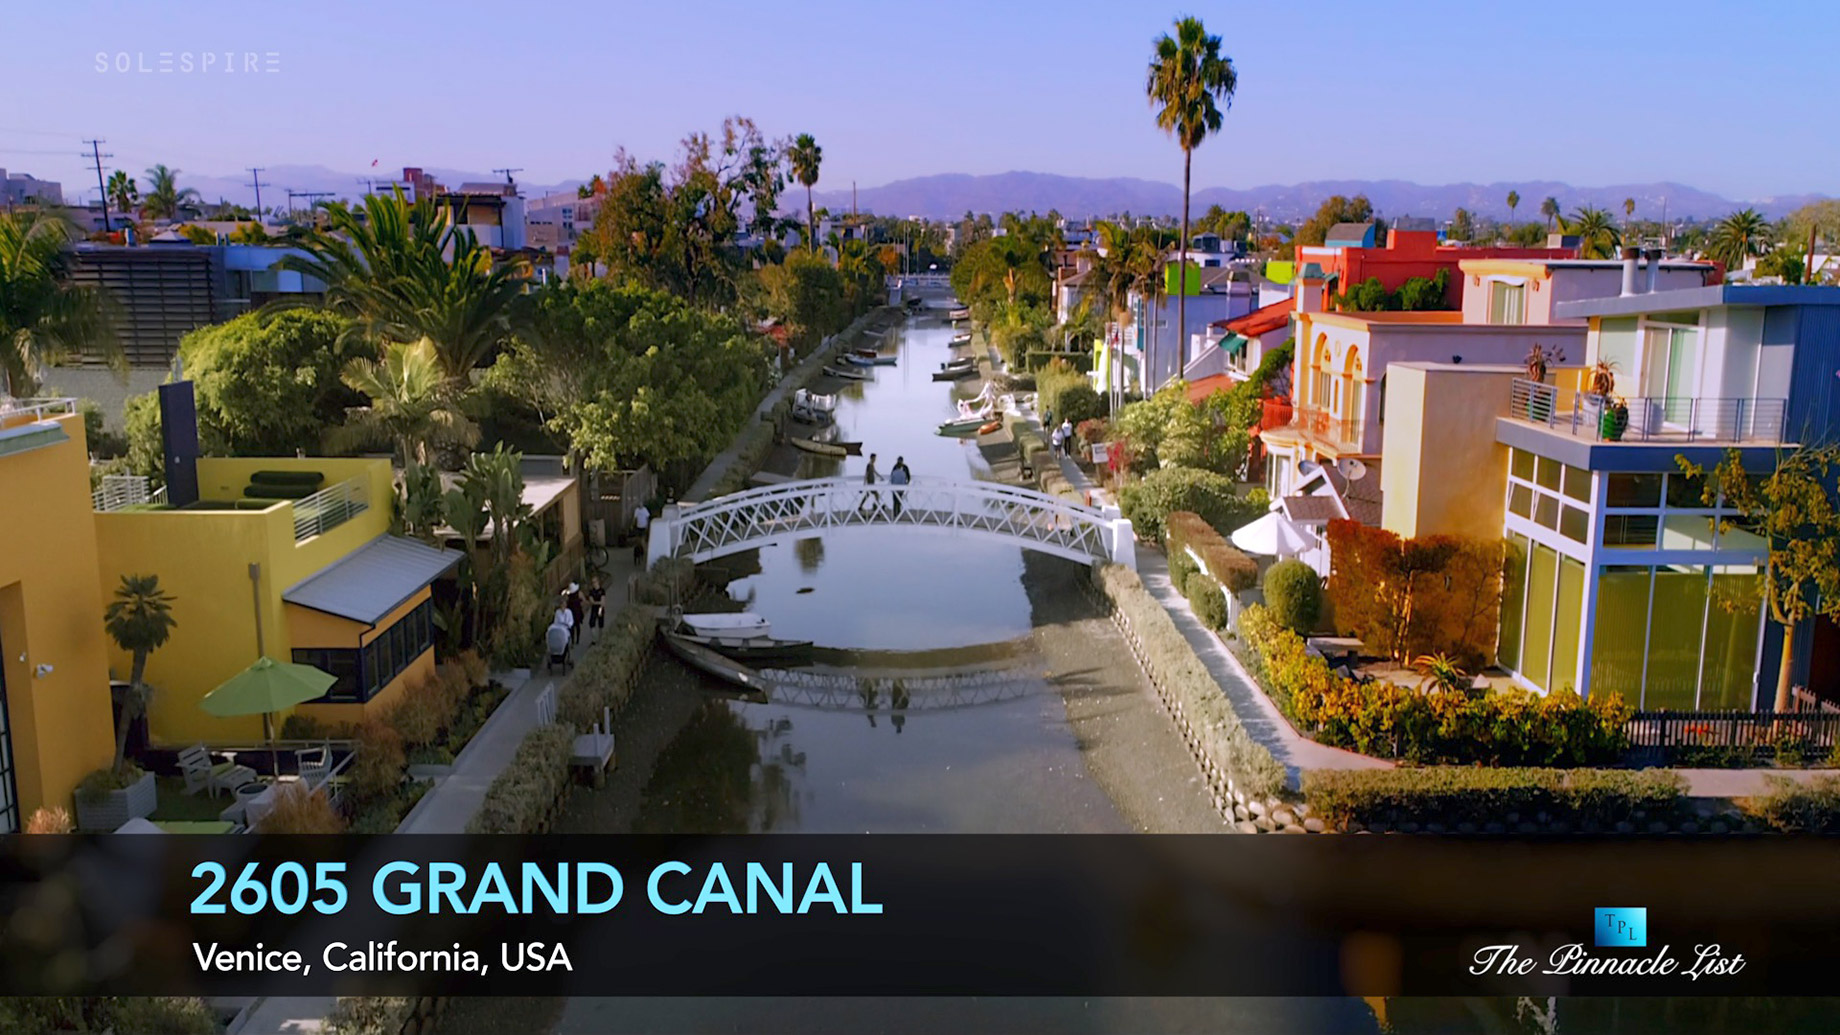 Venice Beach Luxury Home - 2605 Grand Canal, Venice, CA, USA - Luxury Real Estate - Video